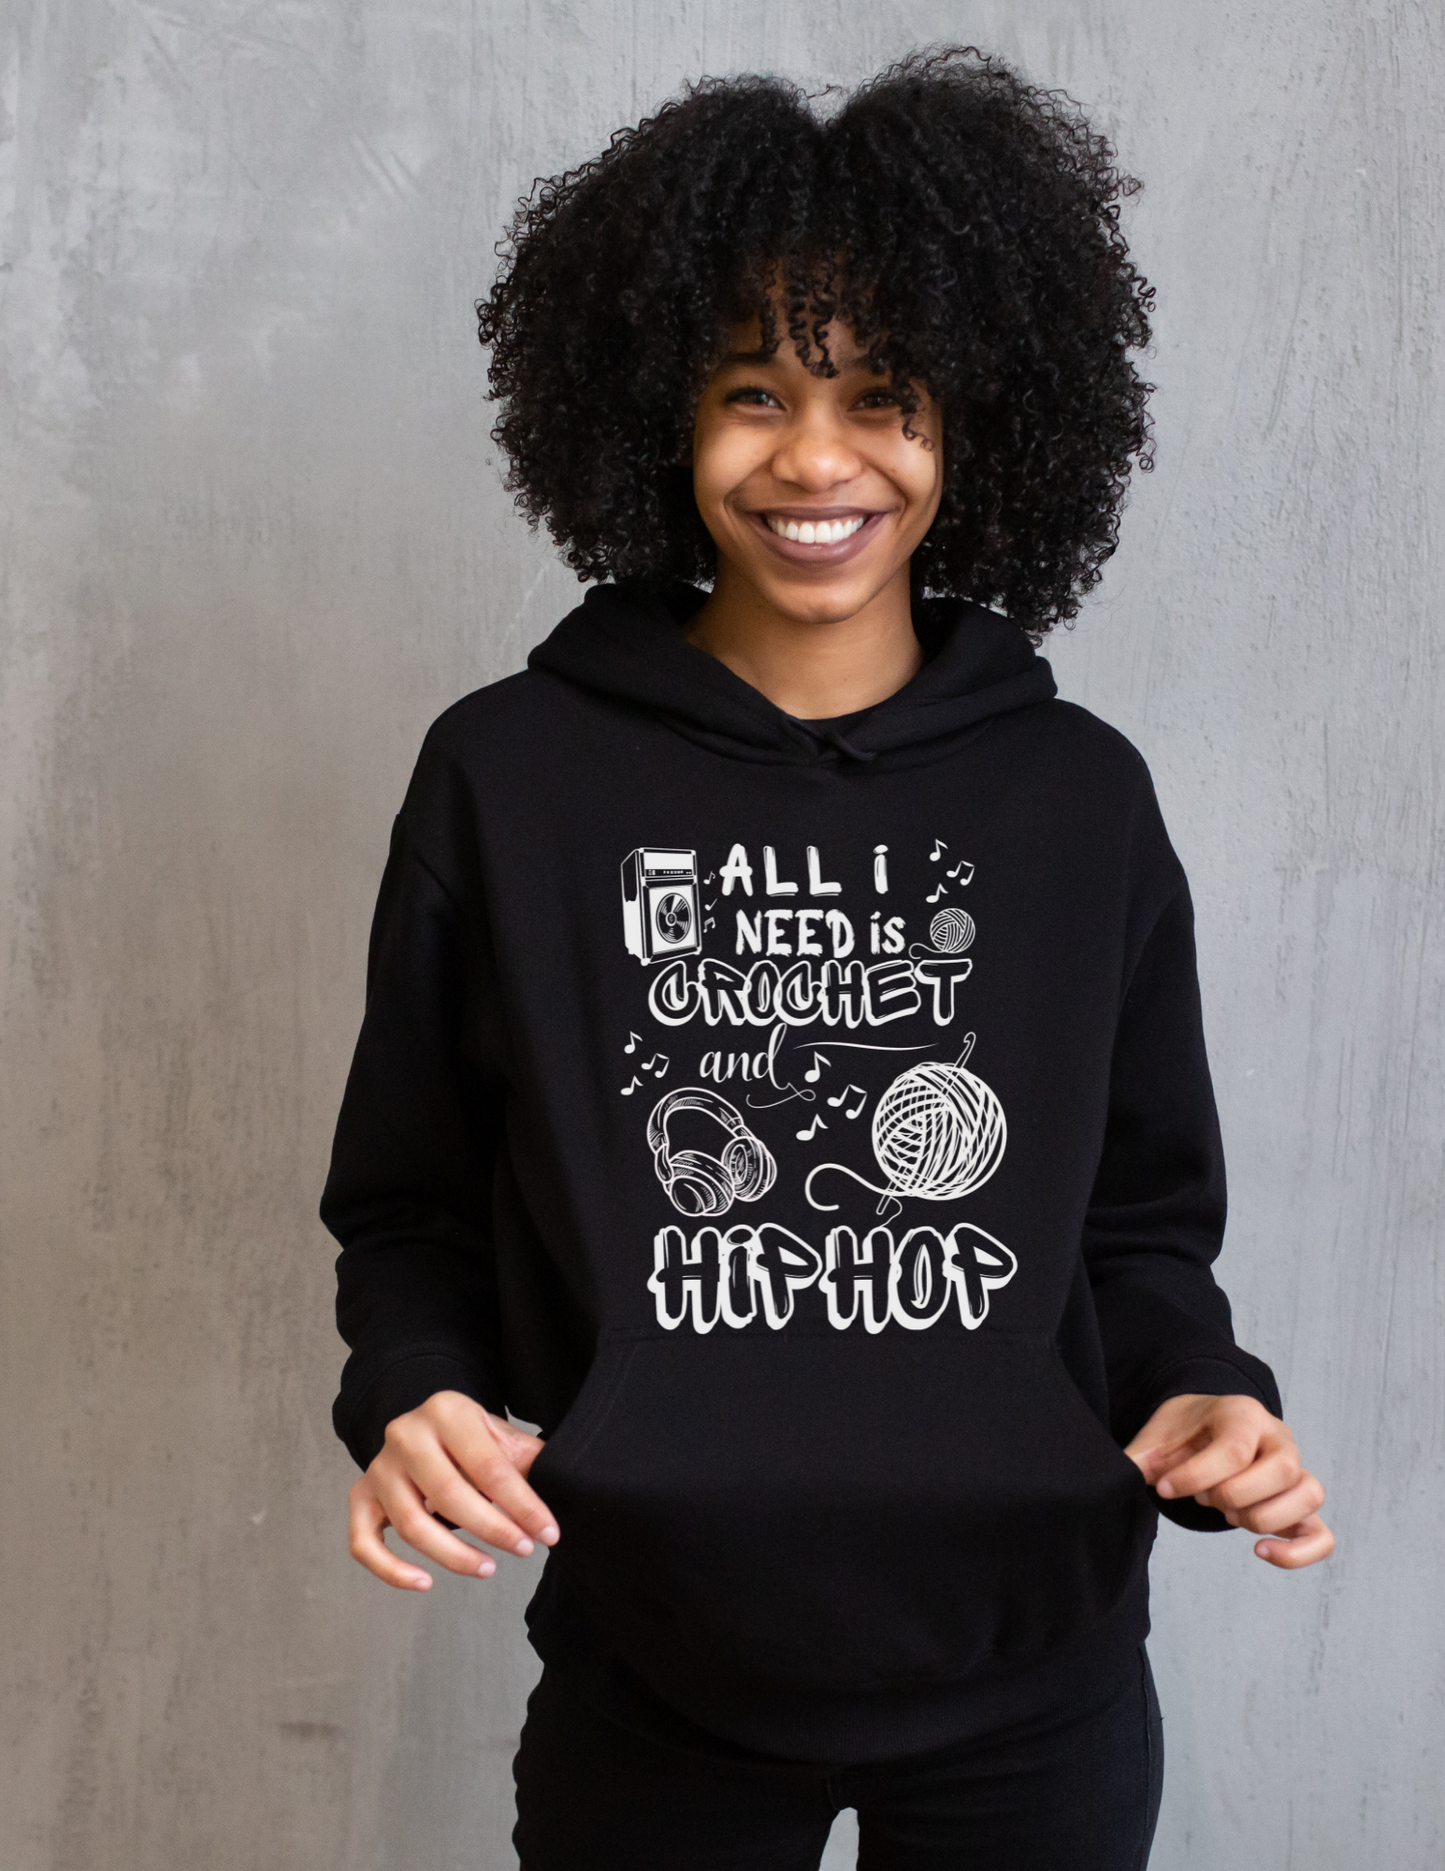 All I need is crochet & hip hop sweatshirt & hoodies